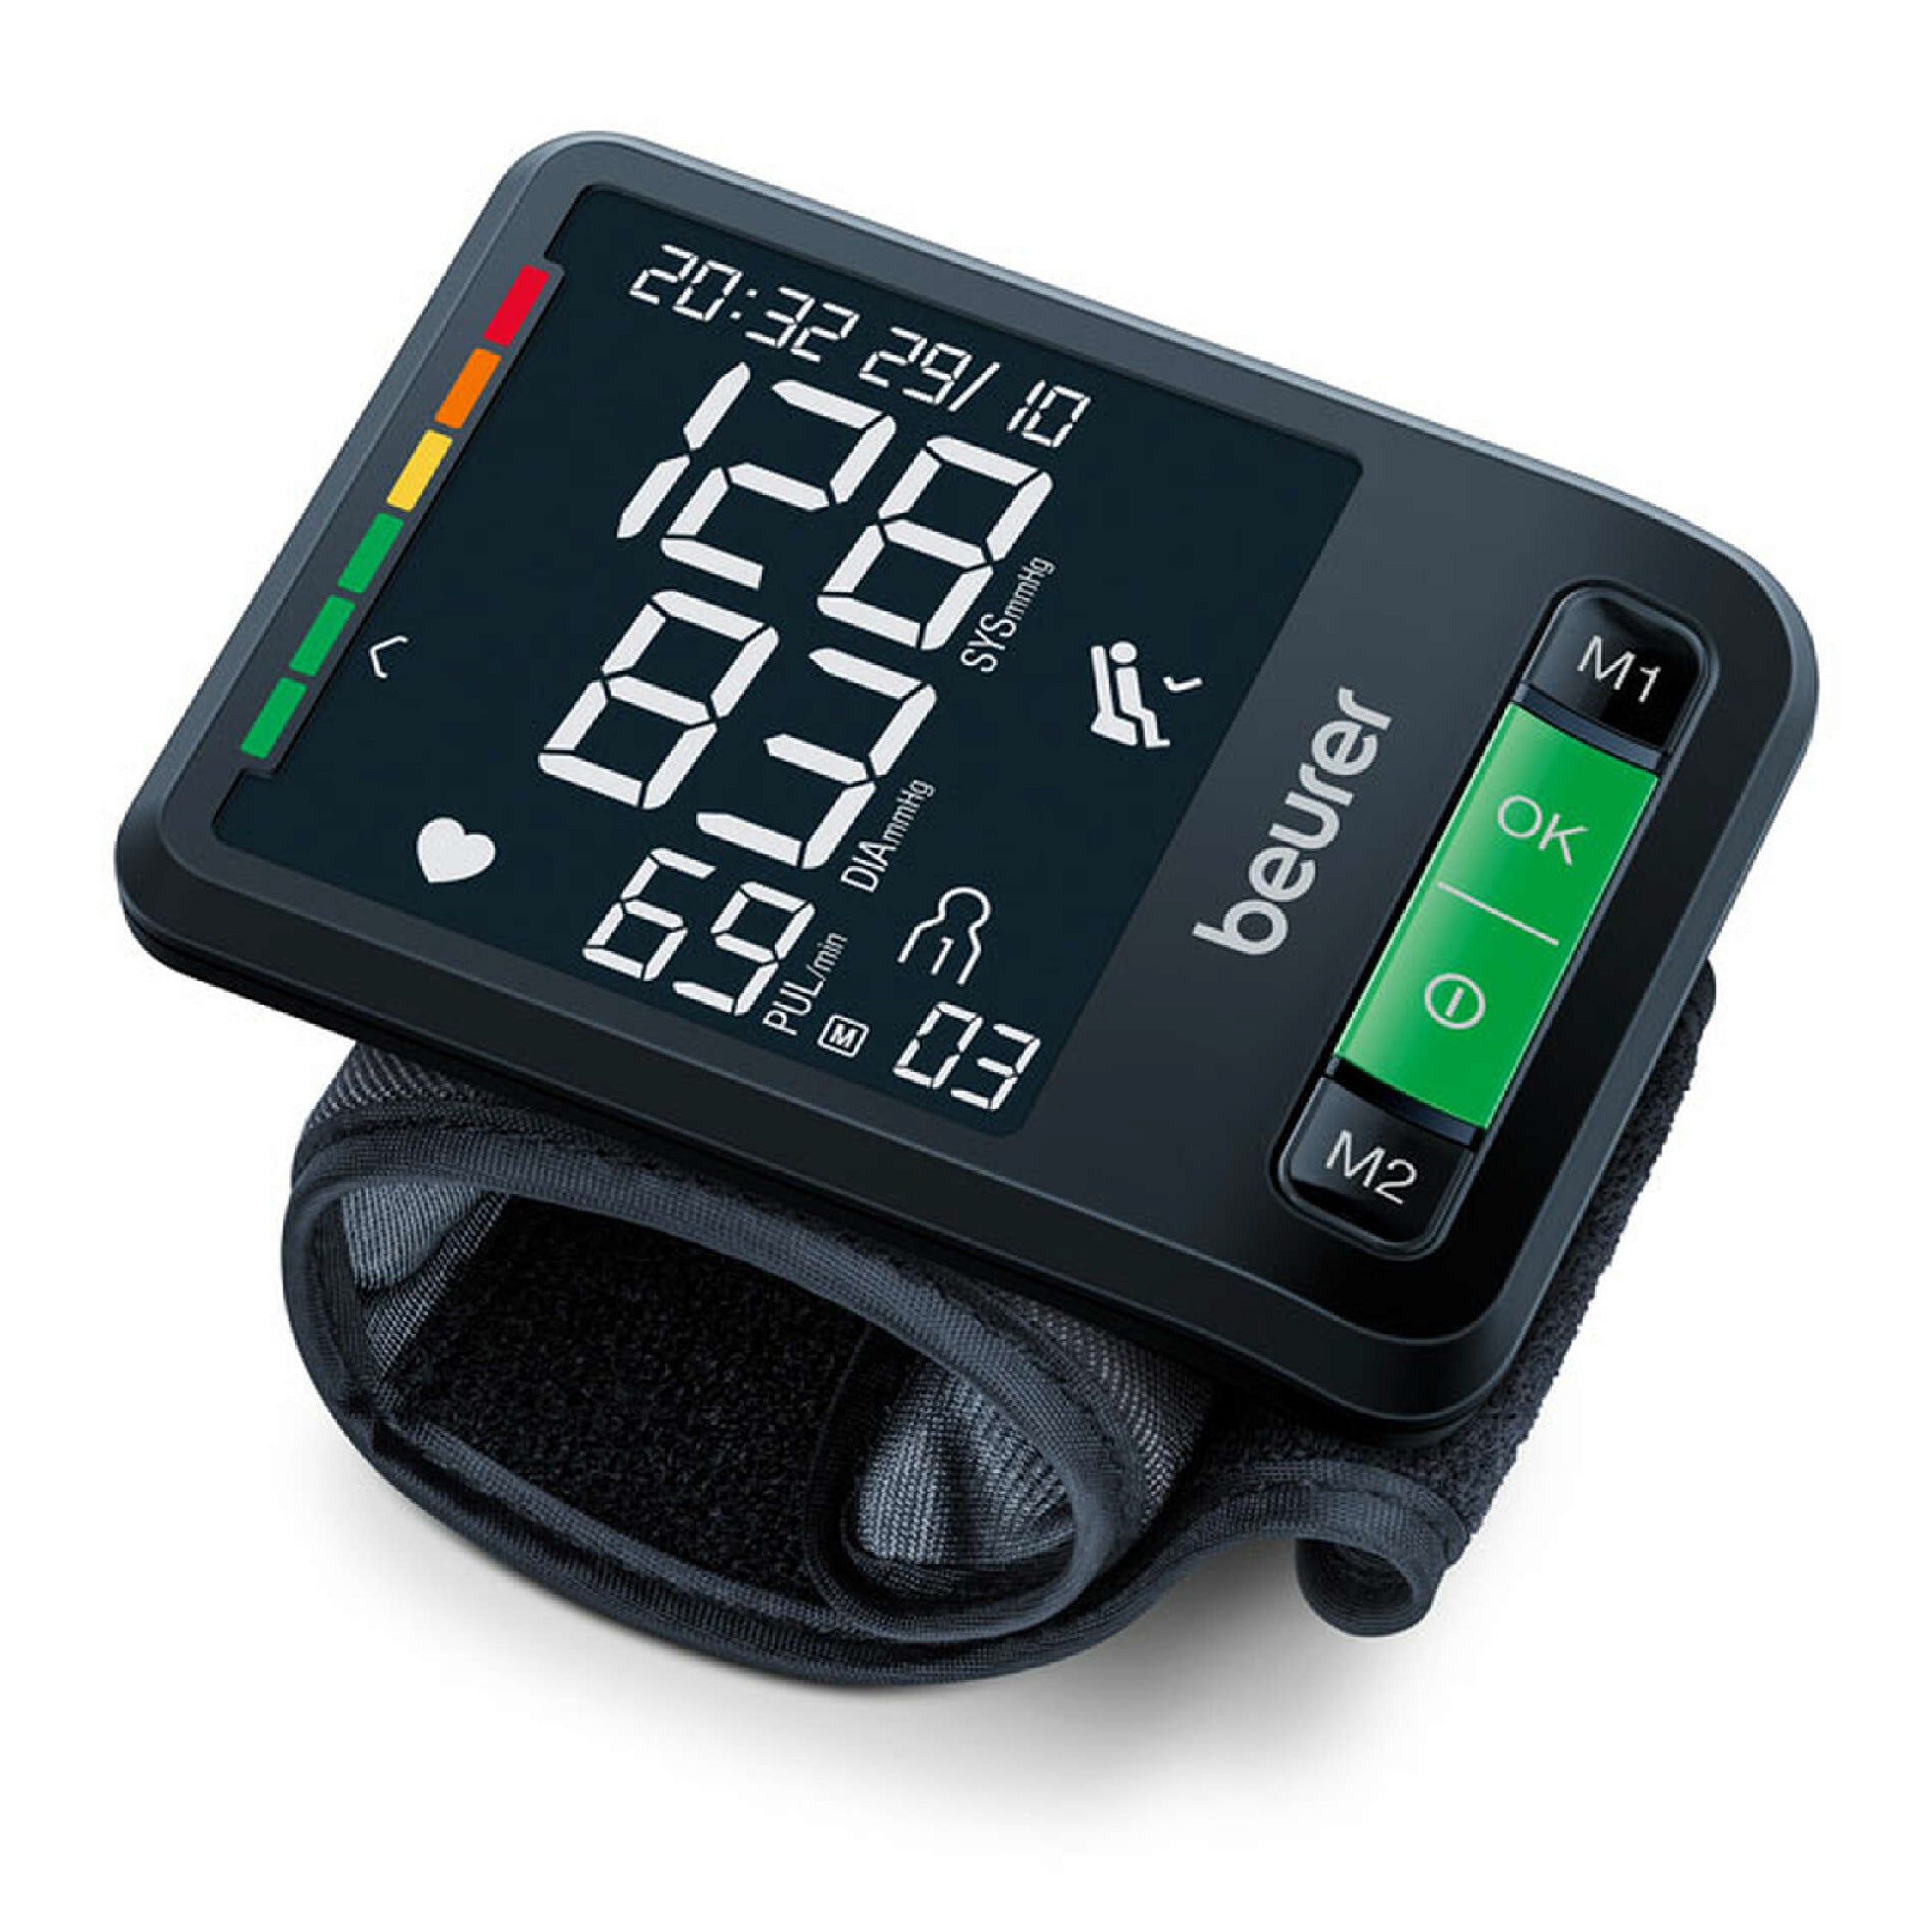 Vive Health Wrist Blood Pressure monitor : BT-V -Vive